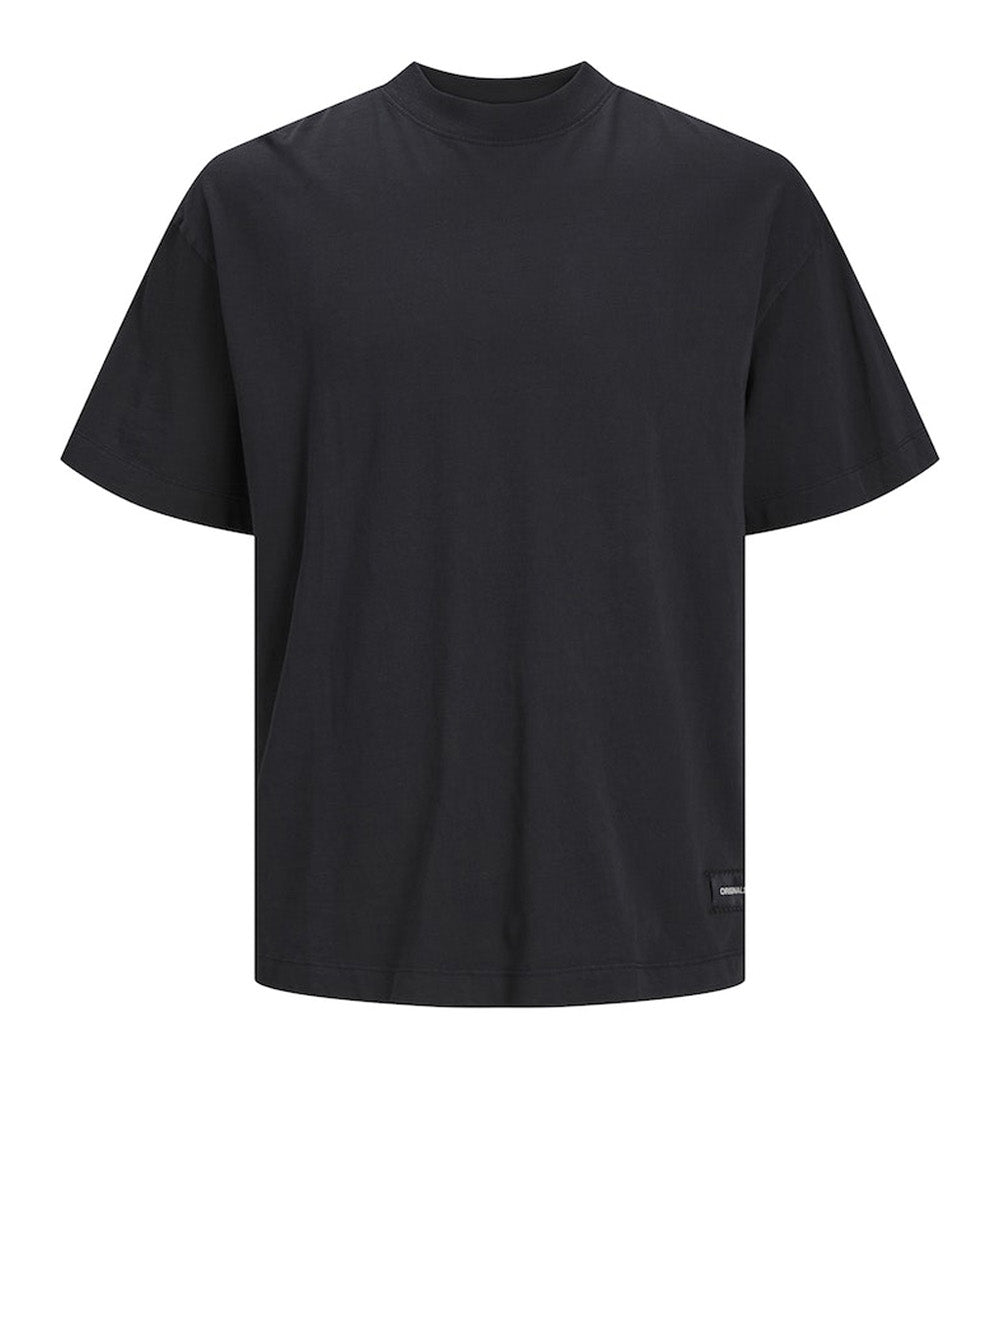 JACK&JONES T-shirt Uomo - Nero modello 12253999